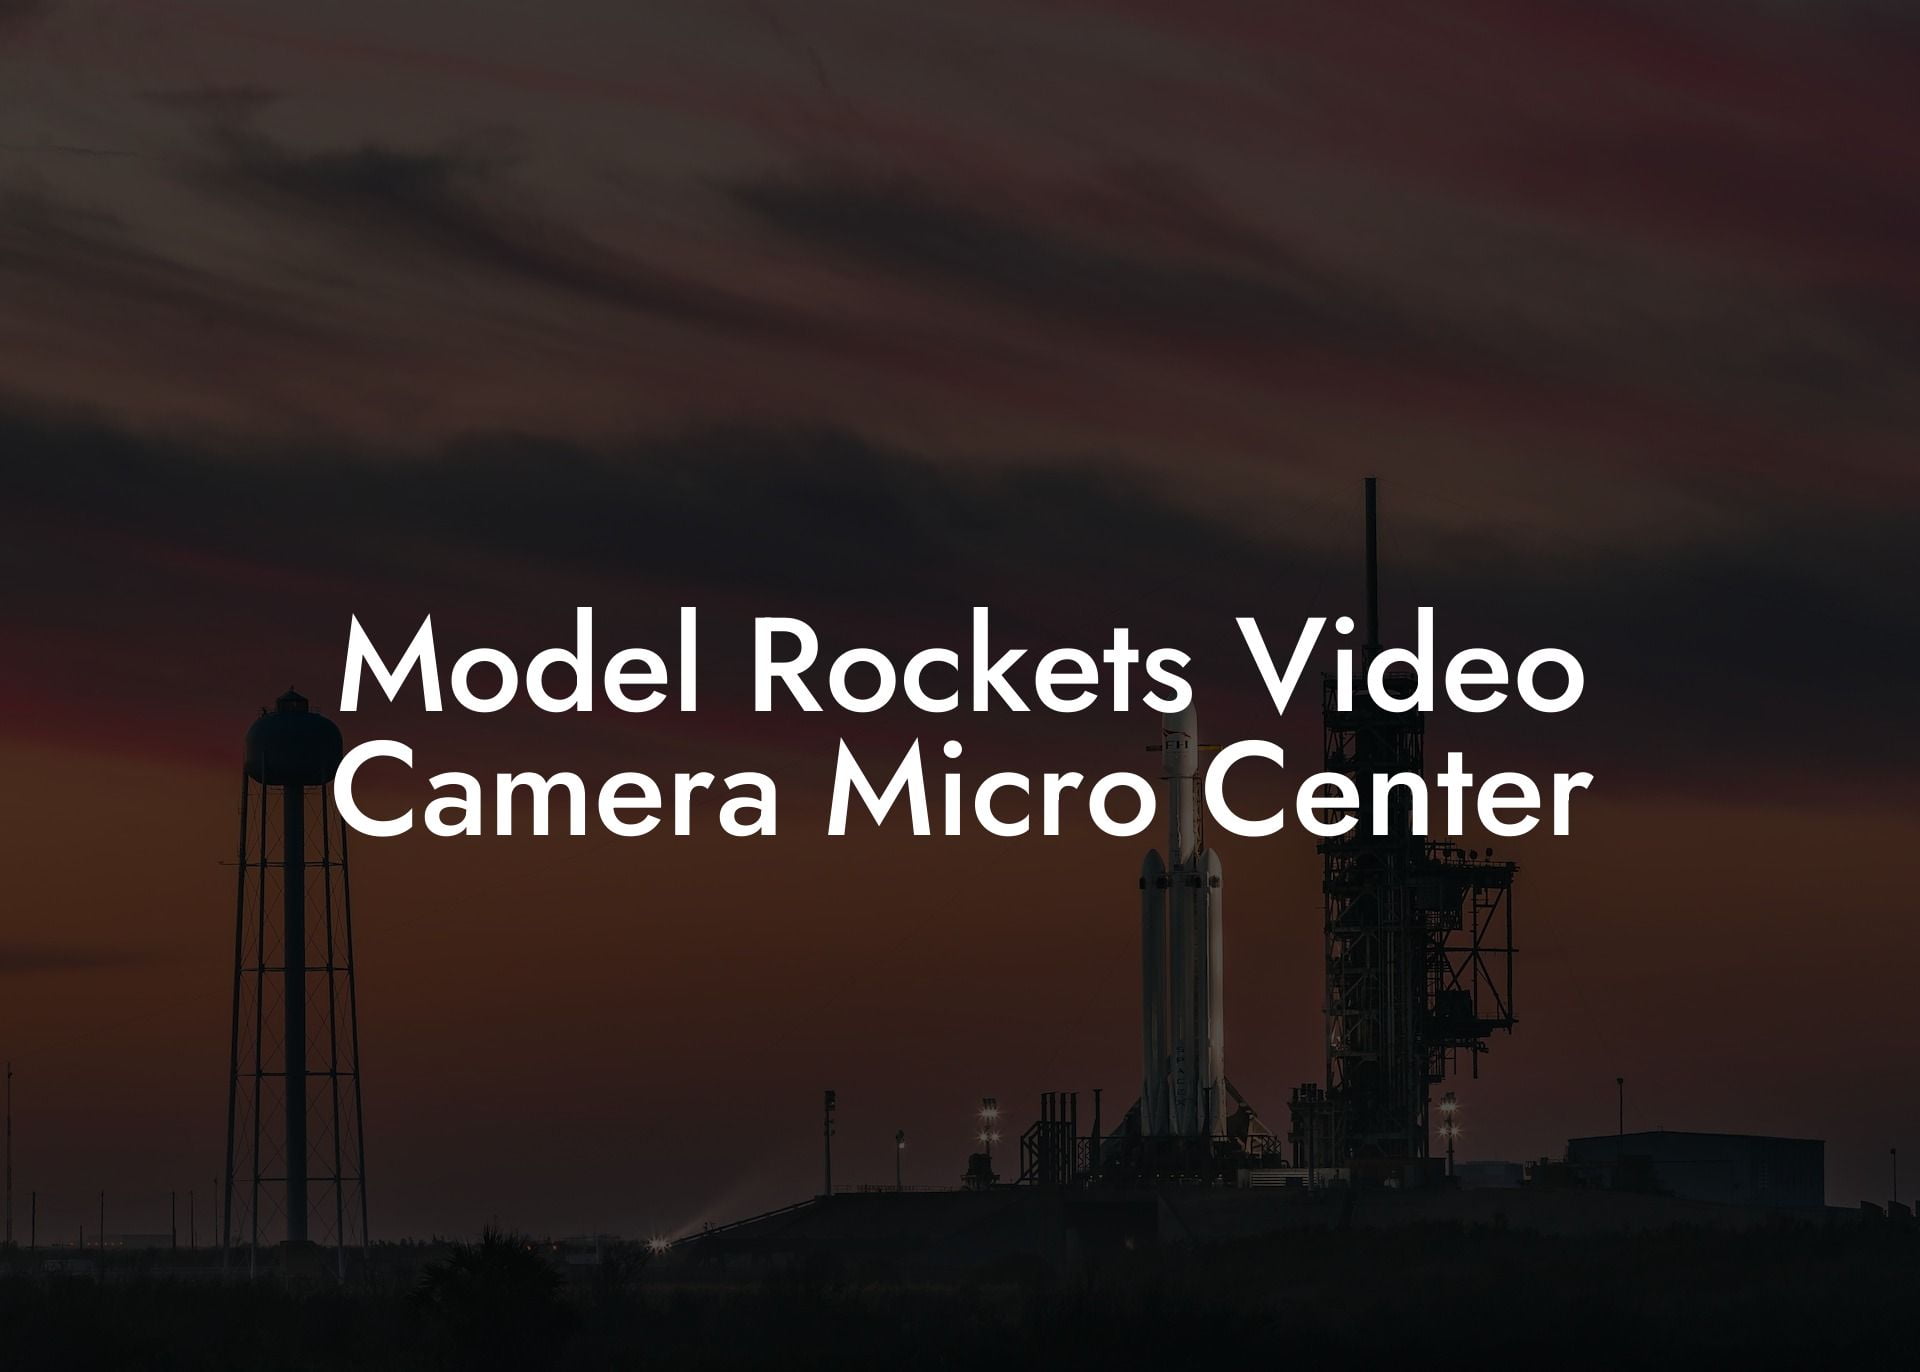 Model Rockets Video Camera Micro Center